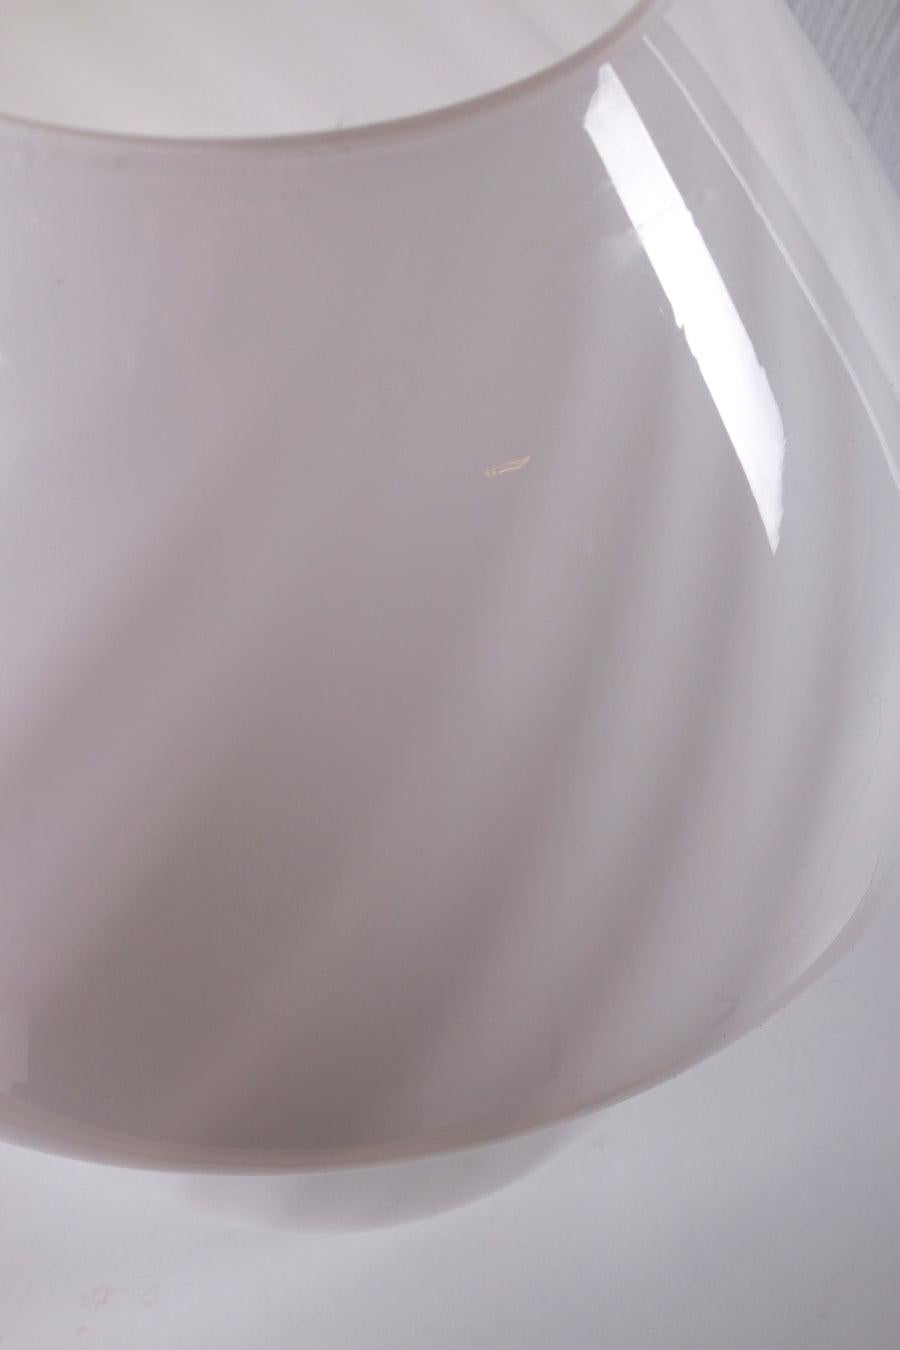 Mid-Century Modern Mushroom Table Lamp Beautiful White Glass Model 6282 For Sale